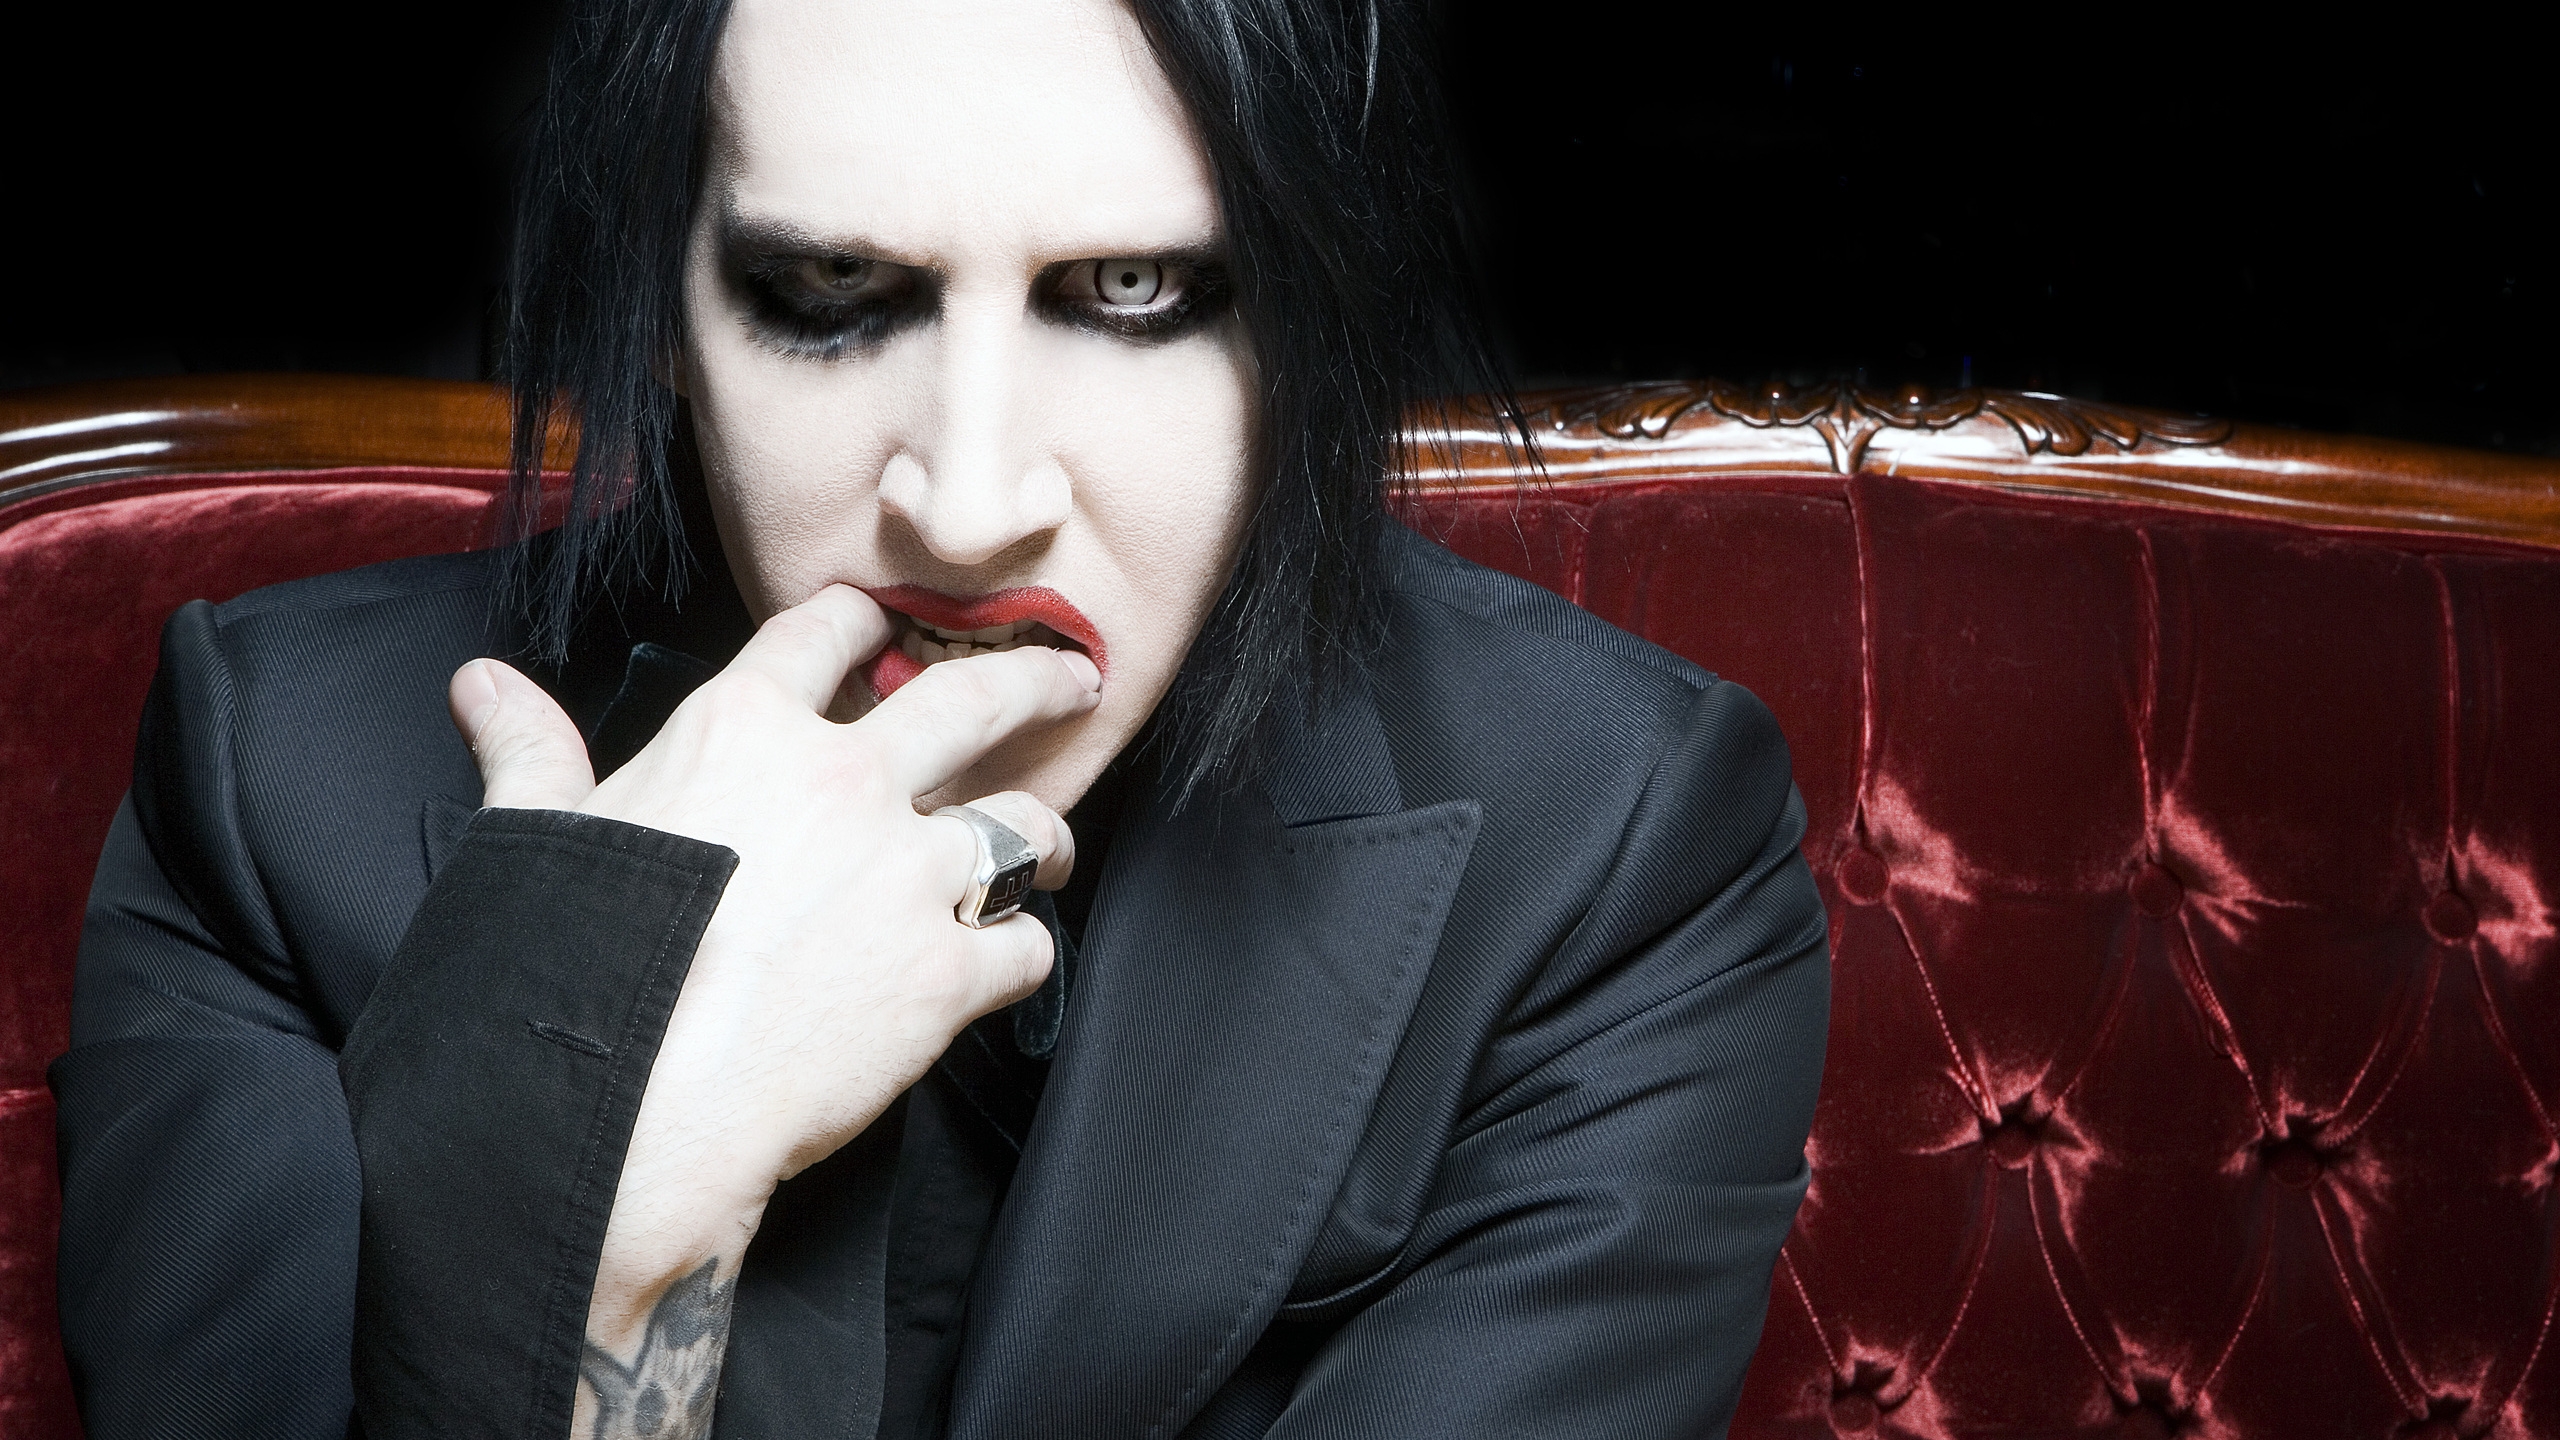 Marilyn Manson for 2560x1440 HDTV resolution